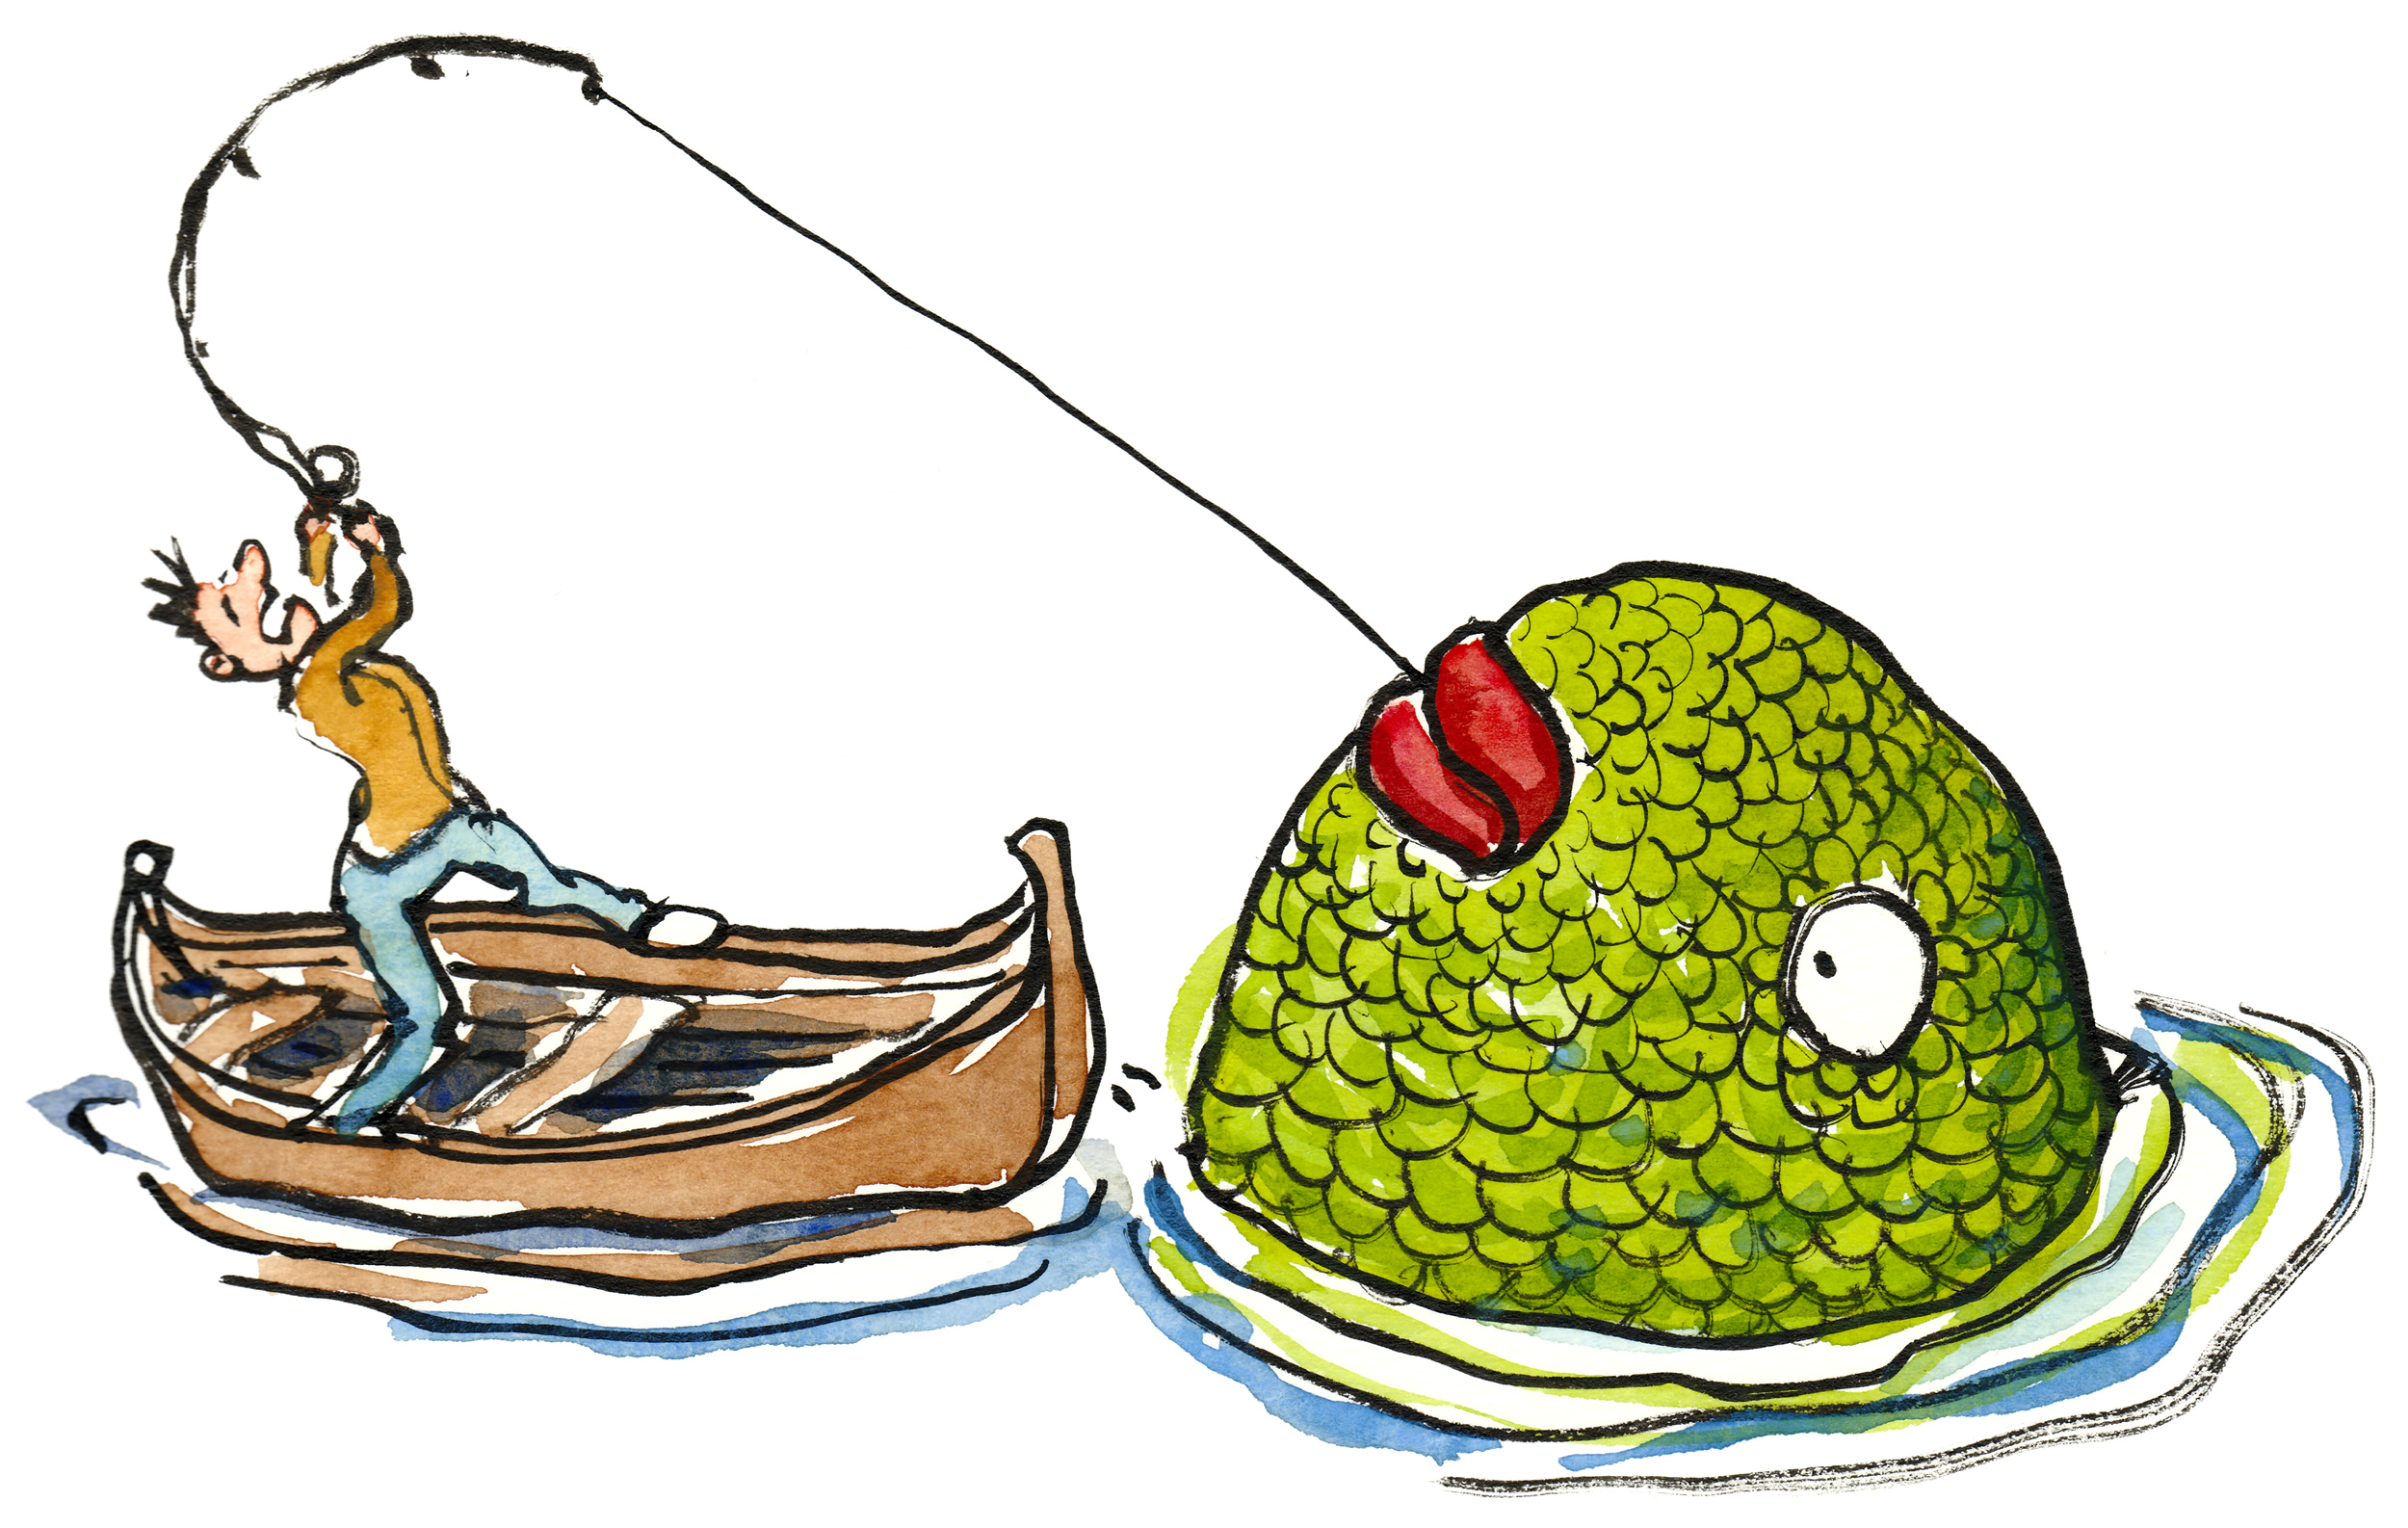 catchingbigfish illustration Illustration By Frits